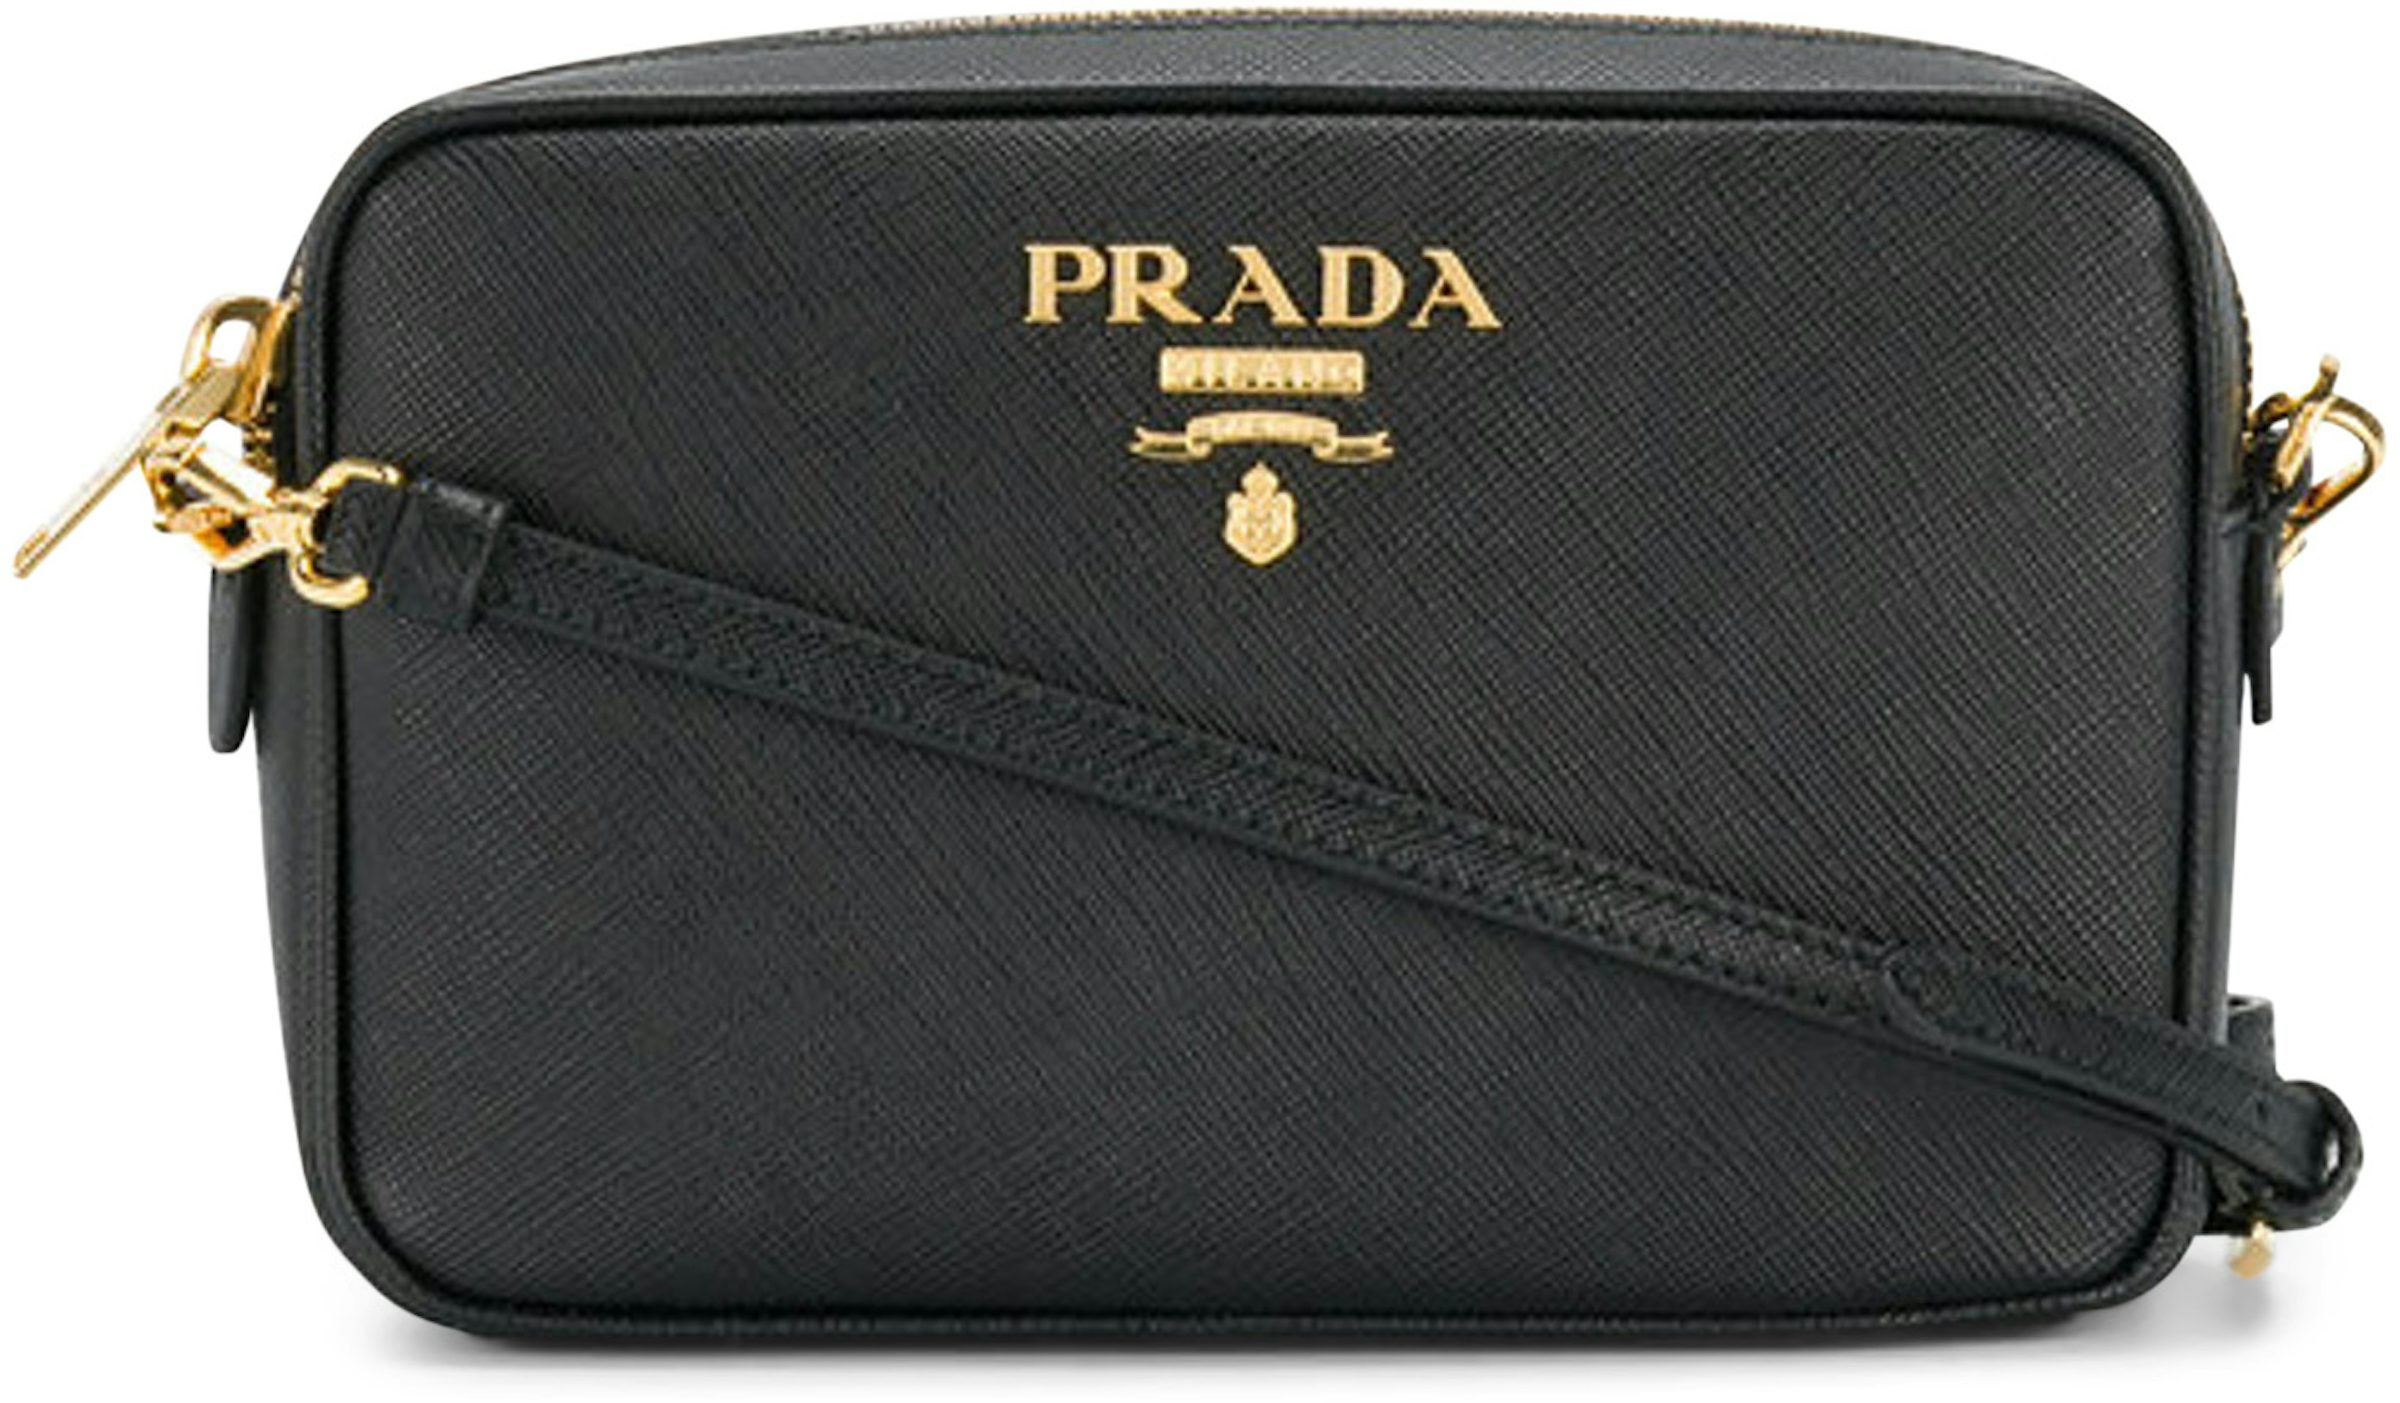 Prada Saffiano Leather Cross-Body Bag